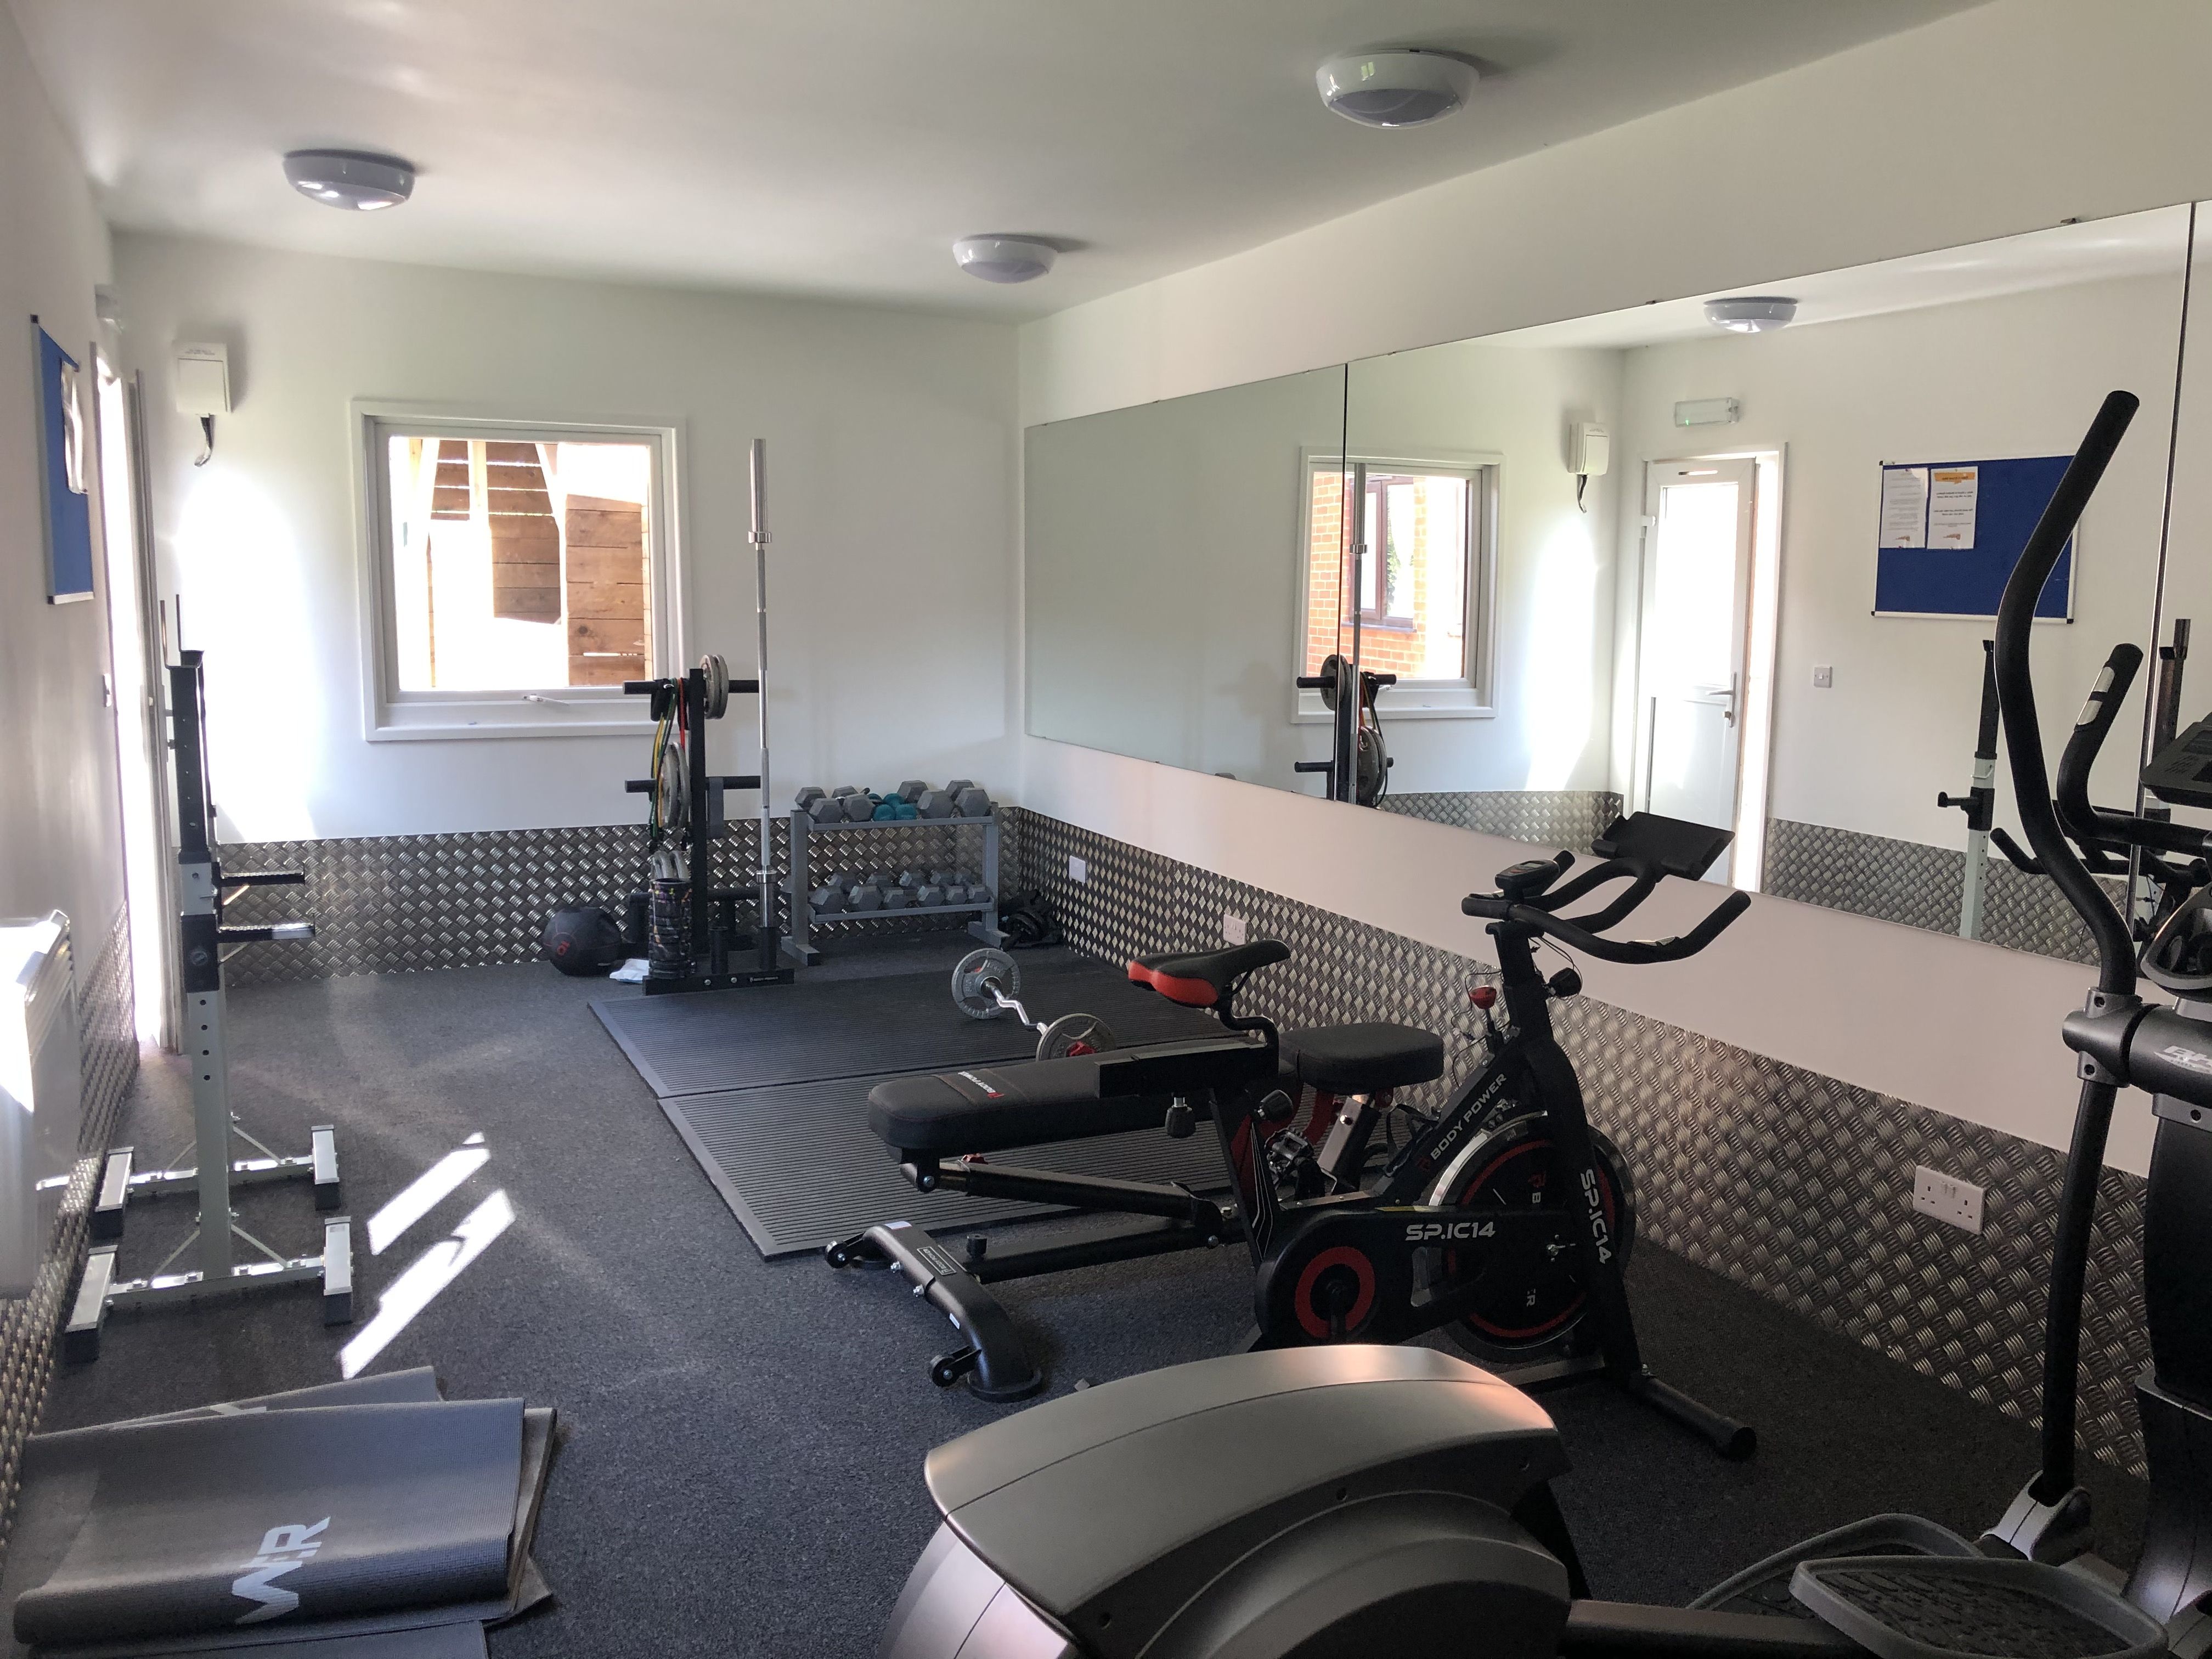 Student Accommodation Loughborough - Kingfisher Halls Gym